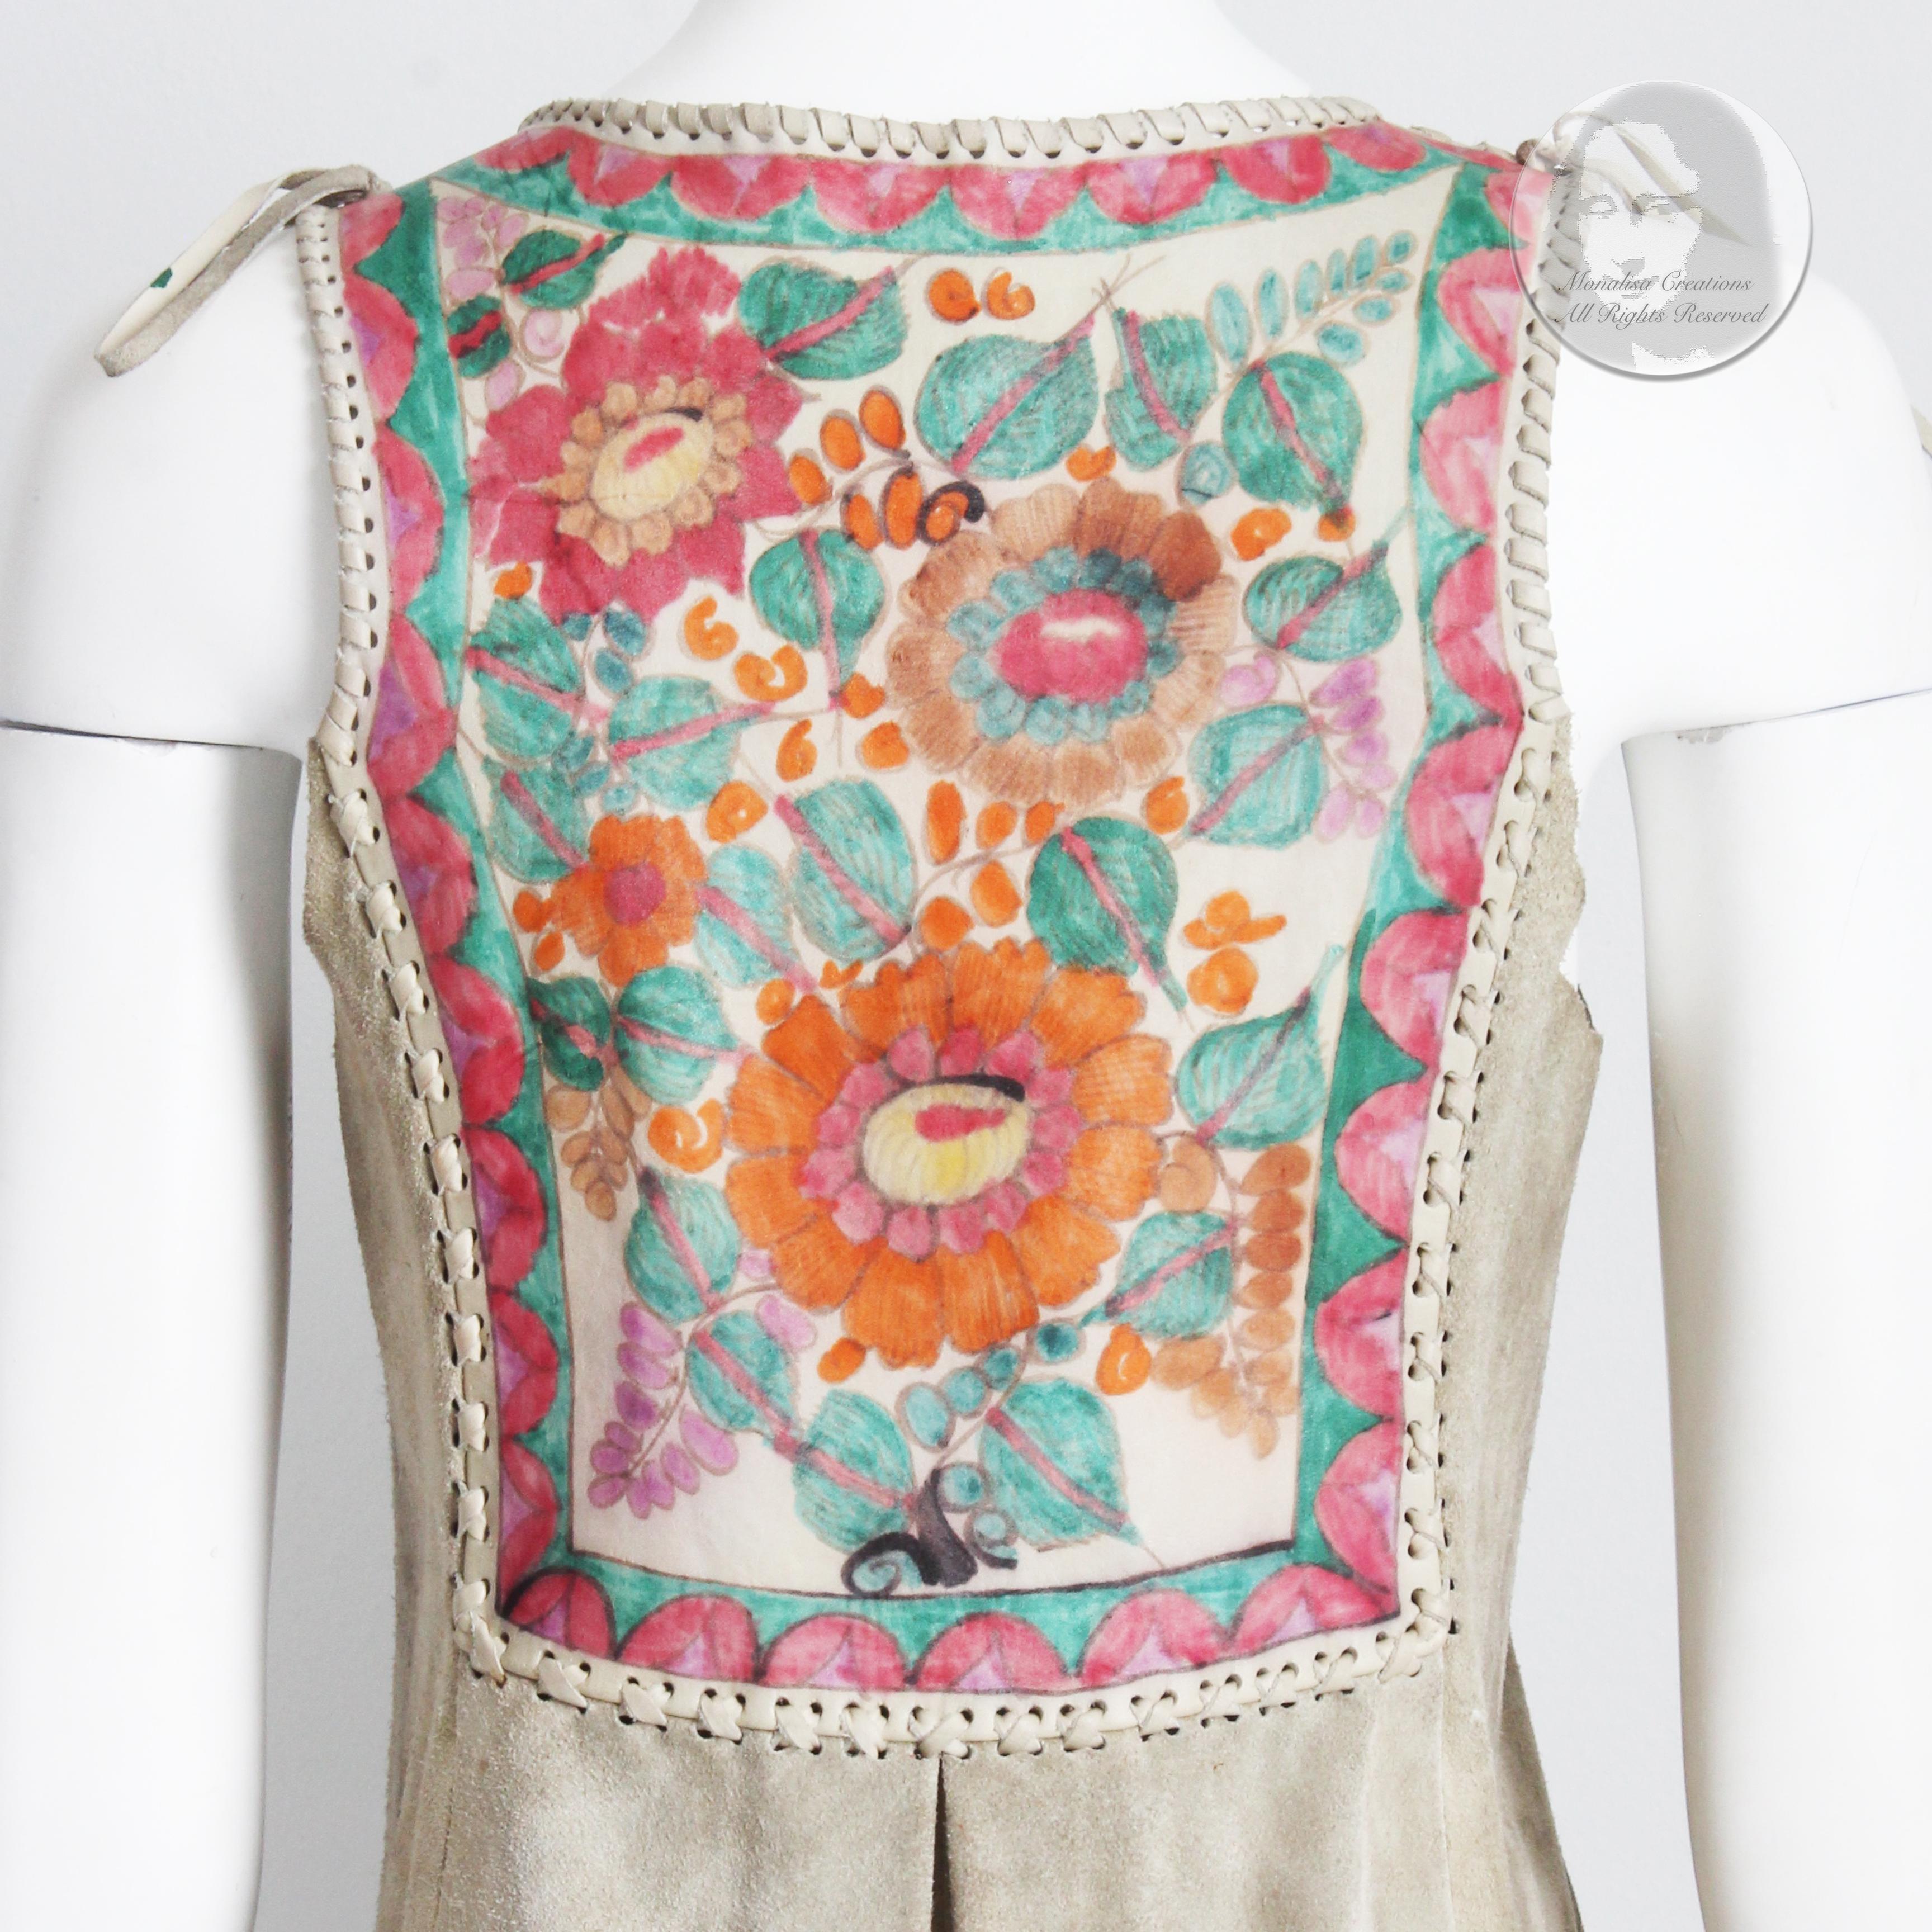 Vintage Char Long Vest Festival Dress Duster Suede Leather Hand Painted Floral S 4